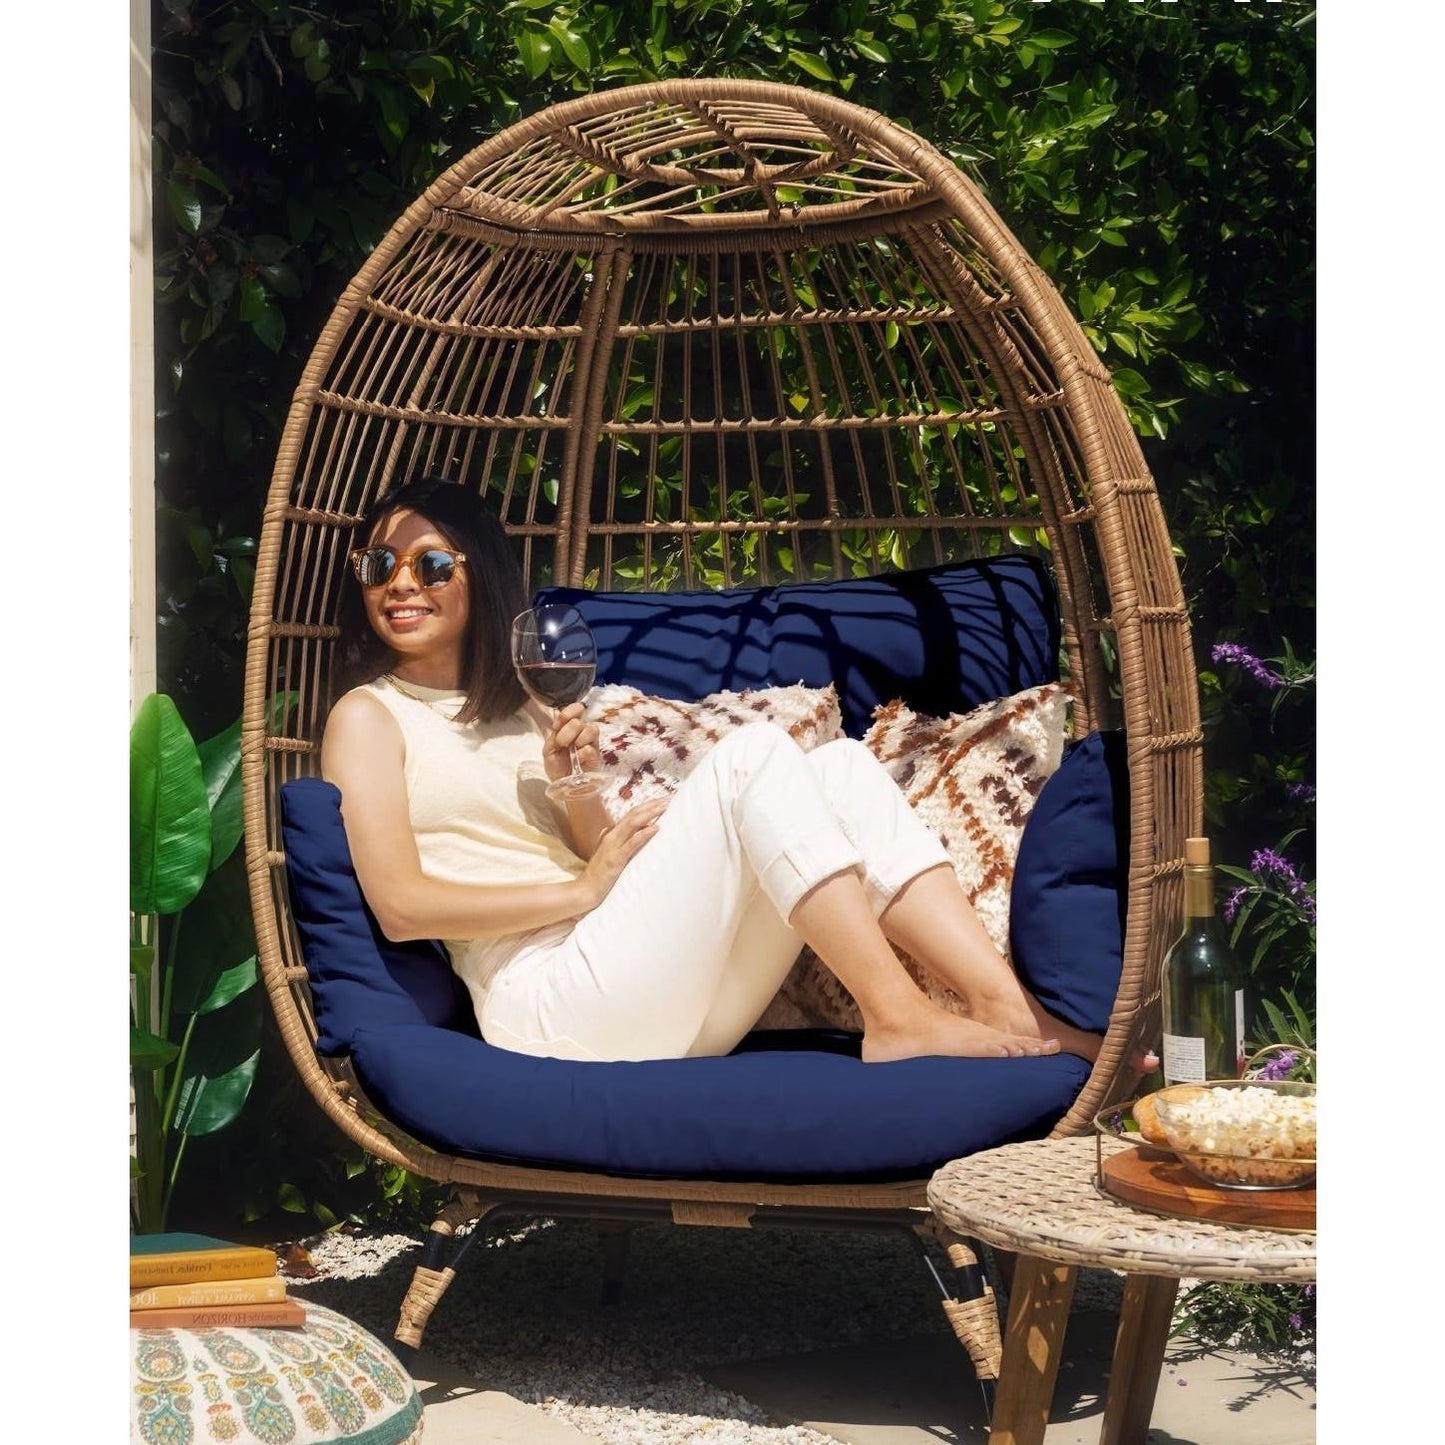 Outdoor > Outdoor Furniture > Porch Swings And Gliders - Oversized Patio Lounger Indoor/Outdoor Wicker Rattan Egg Chair Dark Blue